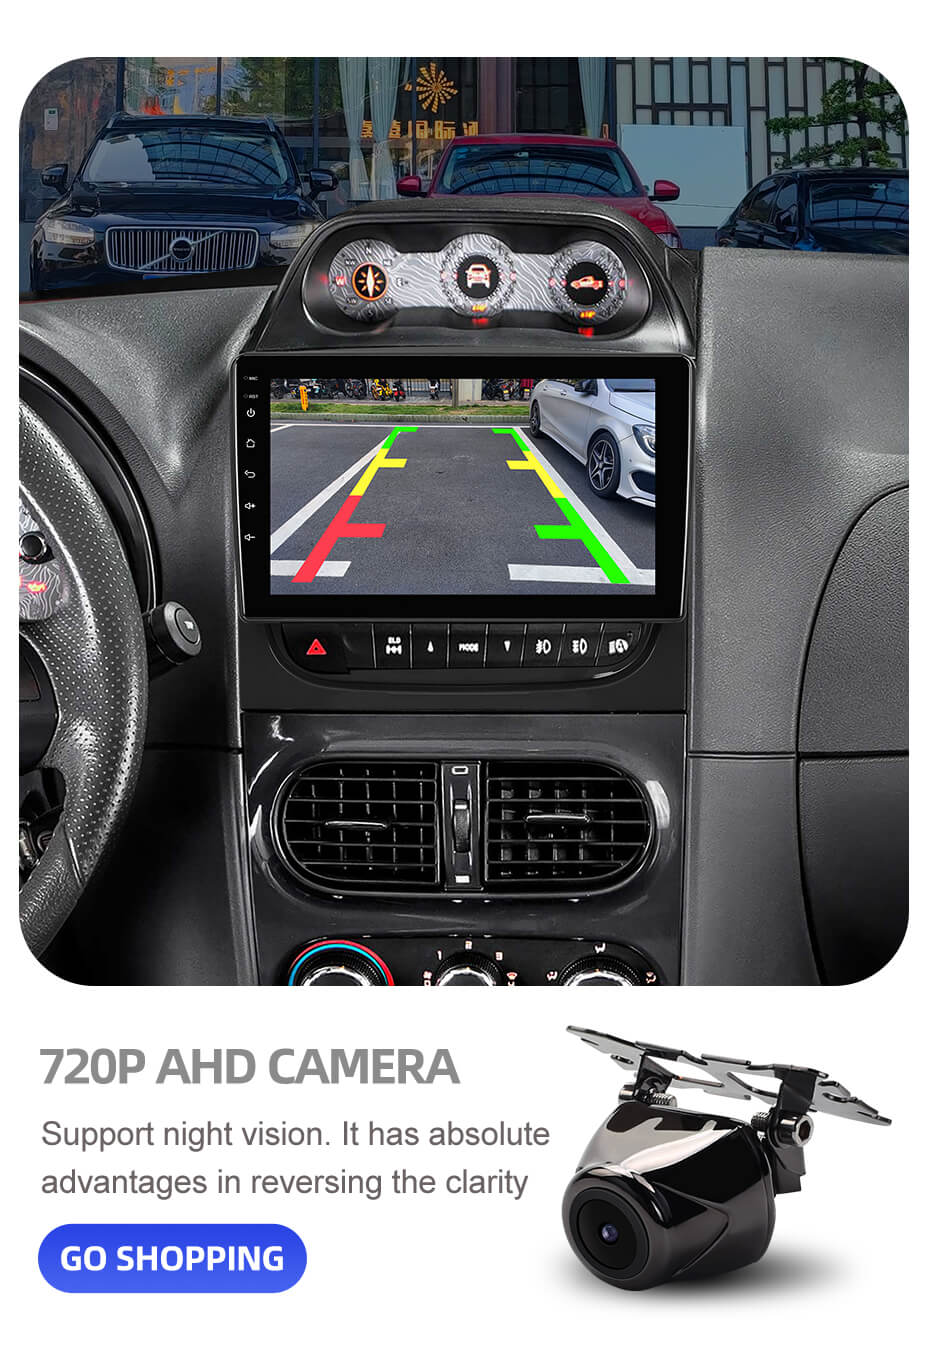 Isudar Voice control Car radio 1 Din Android 10 For Fiat/grande punto  evo/Linea/2012-2018, ISUDAR Official Shop